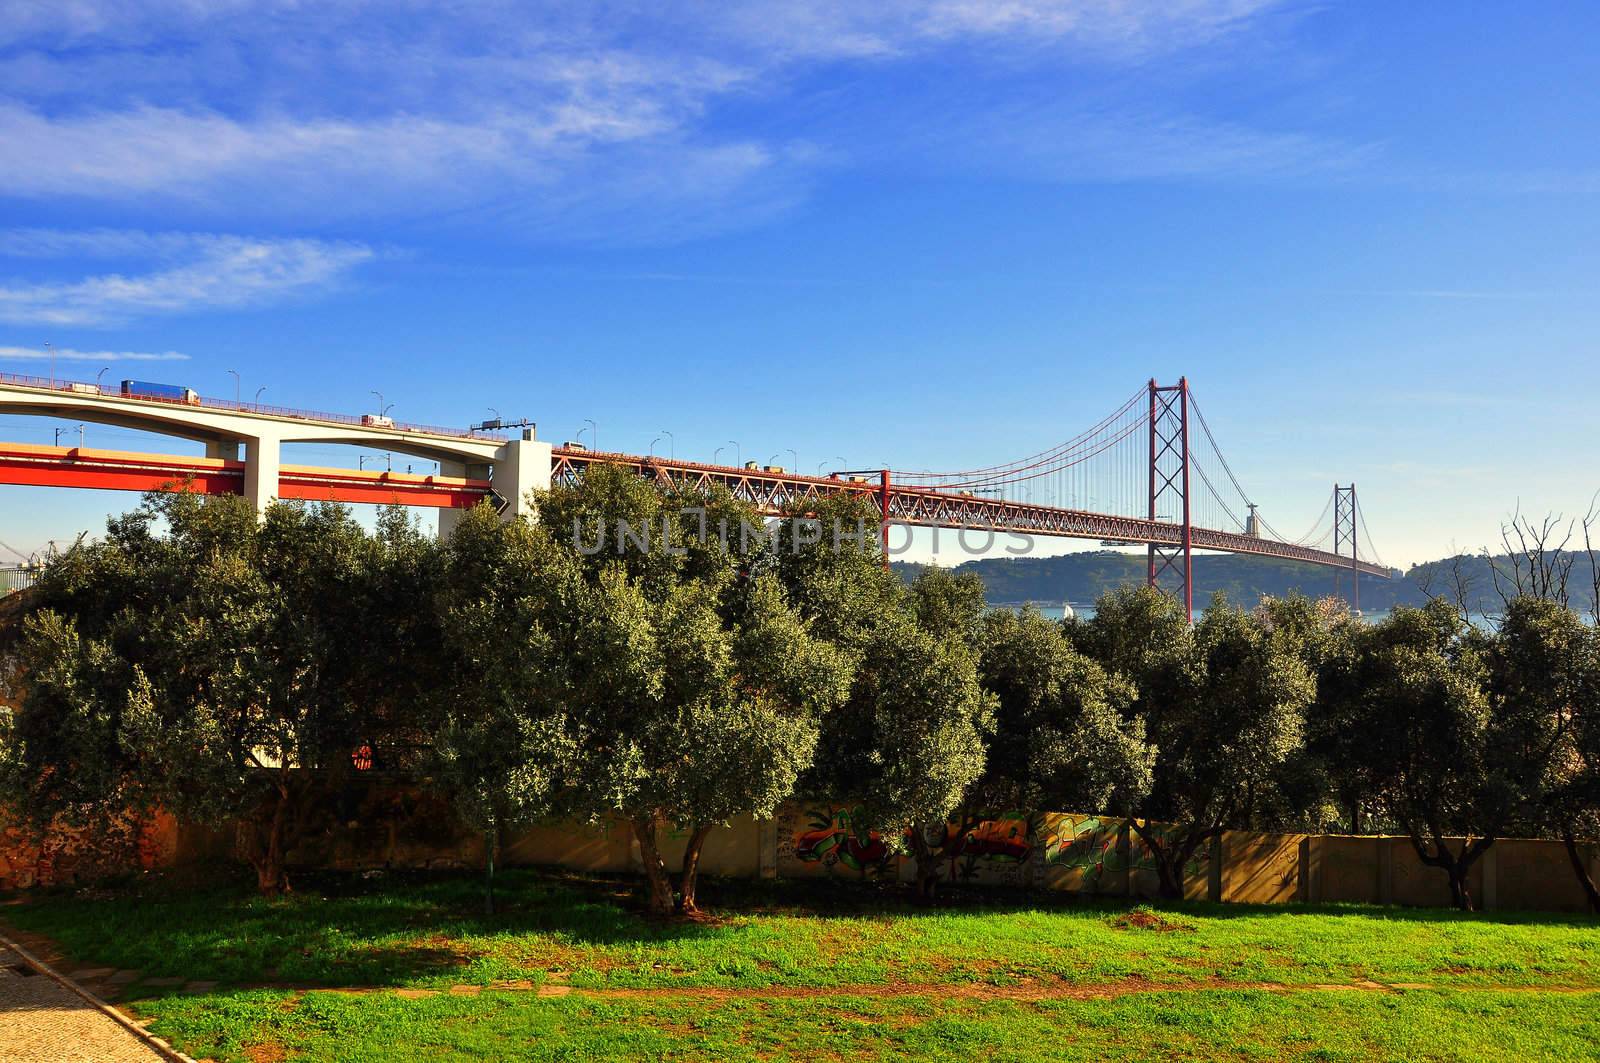  
Construction of the bridge, railway and transport bridge
Portugal Lisbon Bridge on April 25 architecture